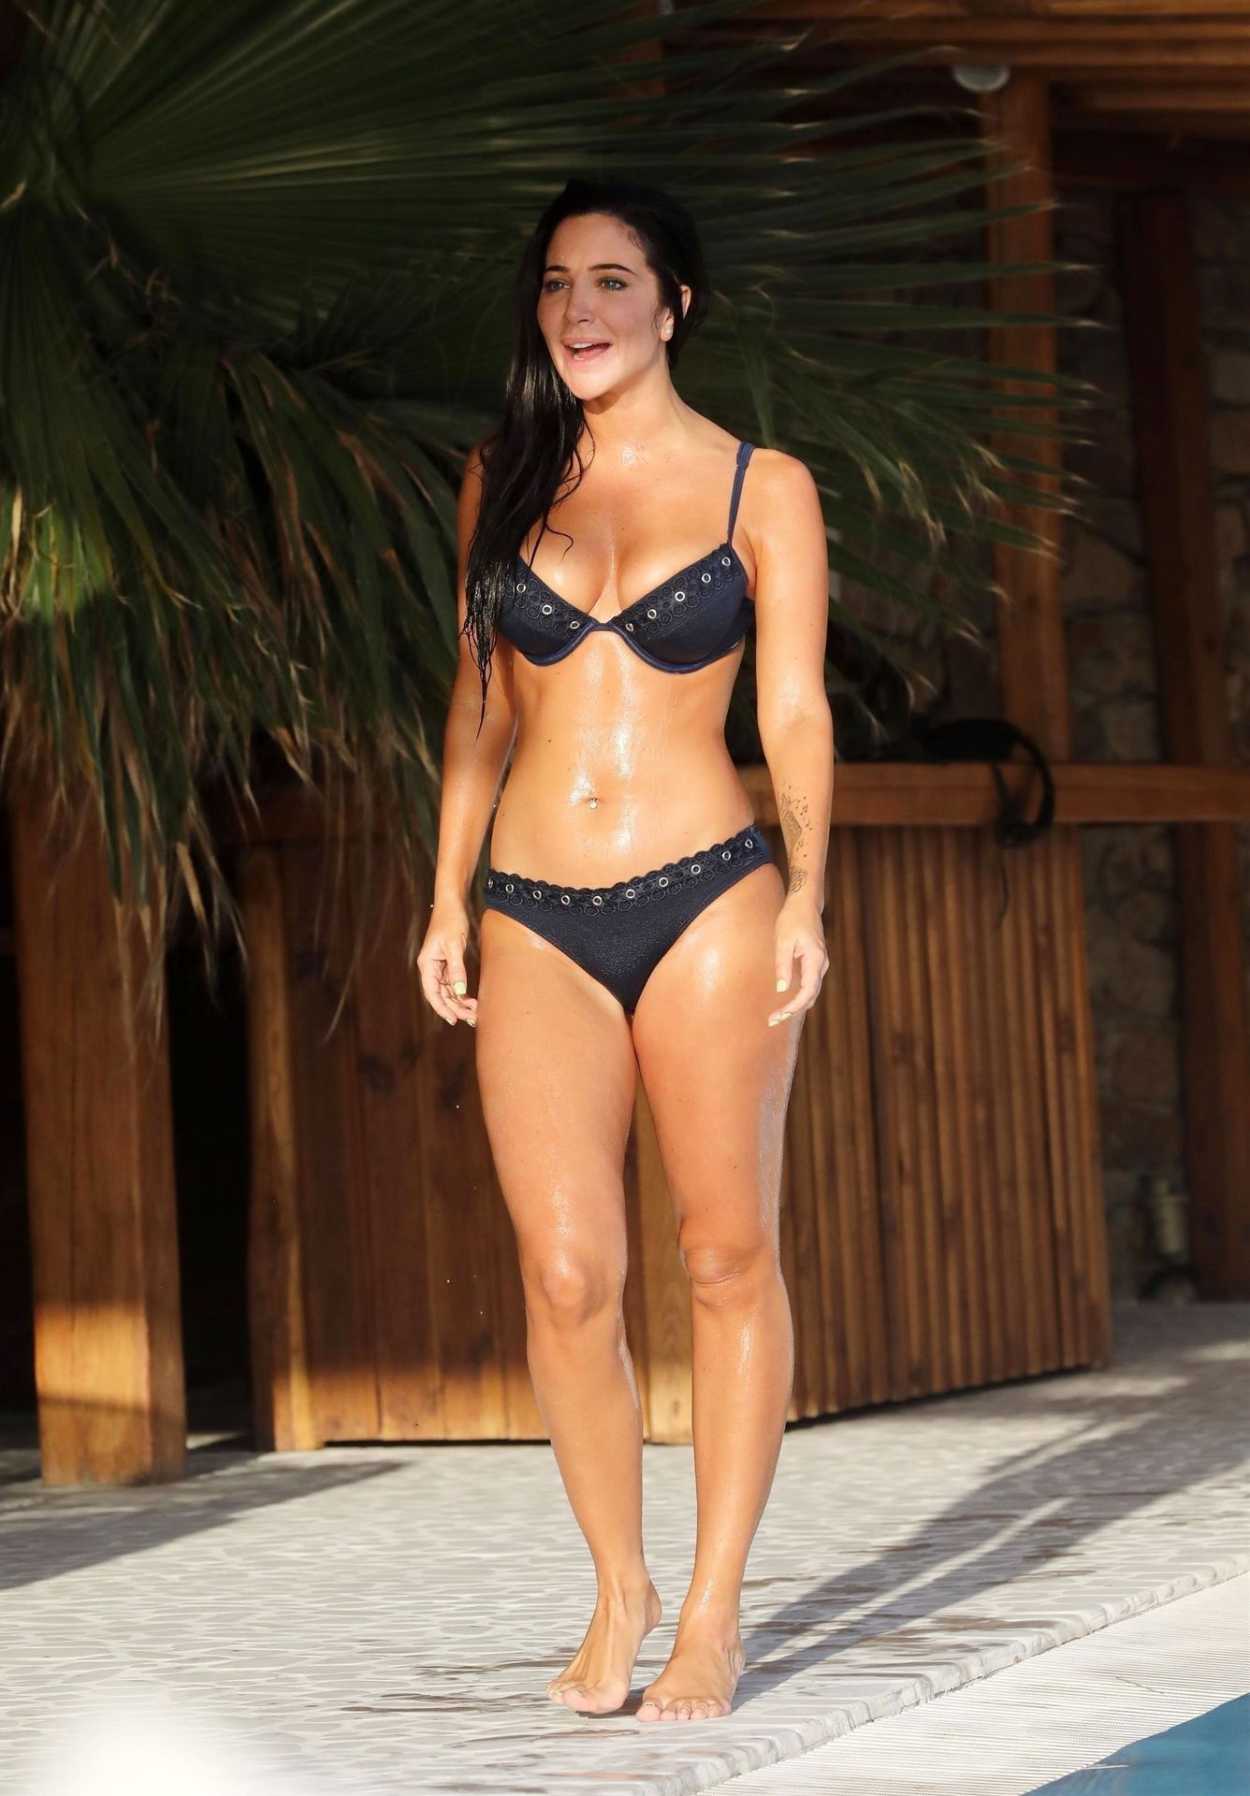 Tulisa Contostavlos In A Black Bikini By The Pool In G